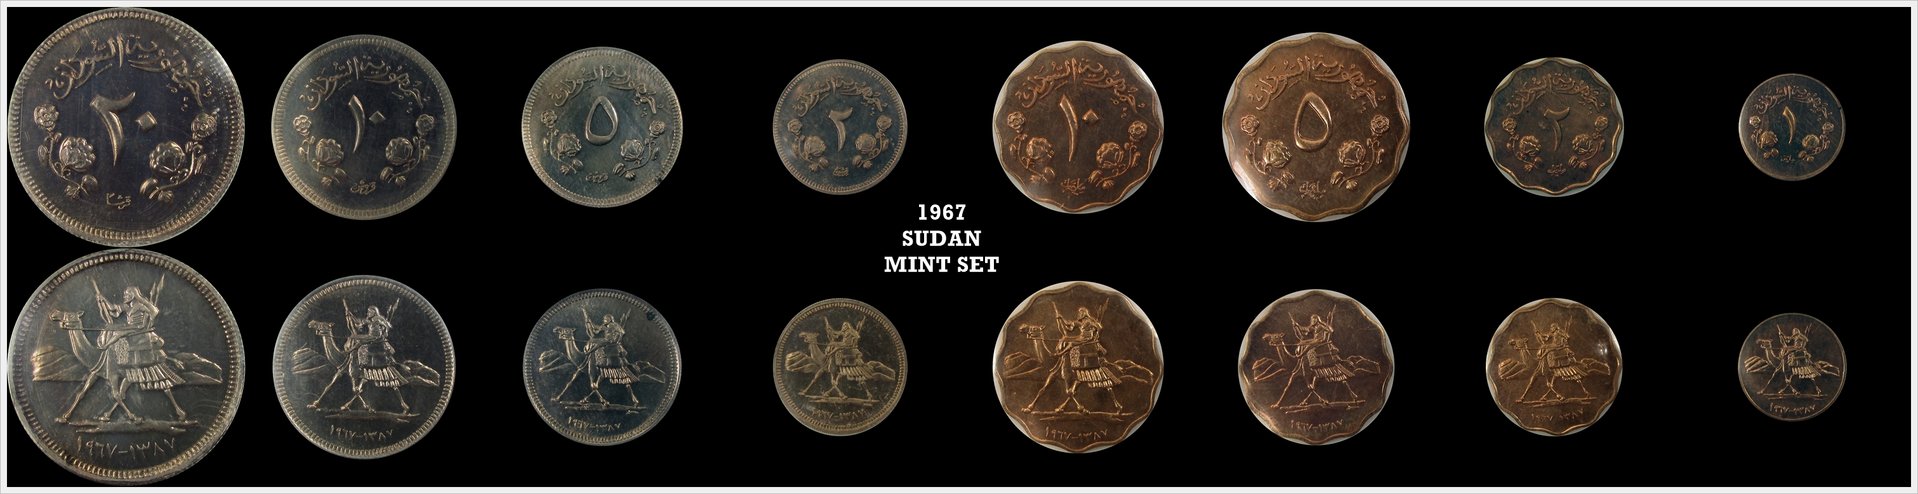 Sudan 1967 Mint Set.jpg